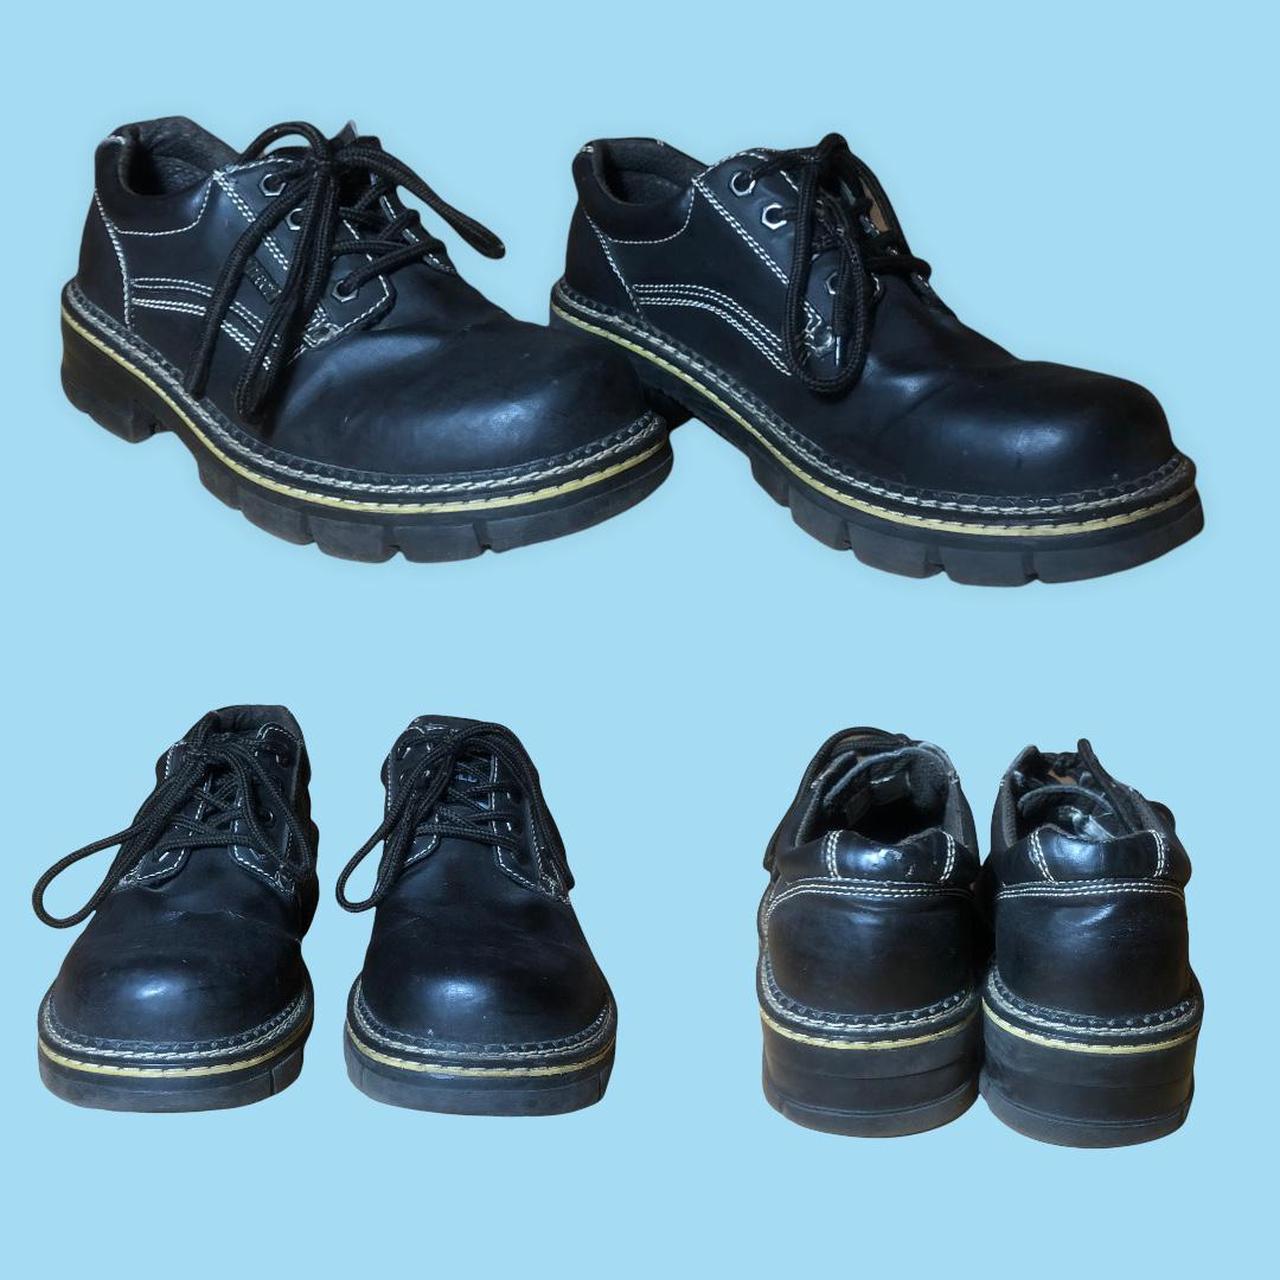 Men's Black and Cream Boots (3)